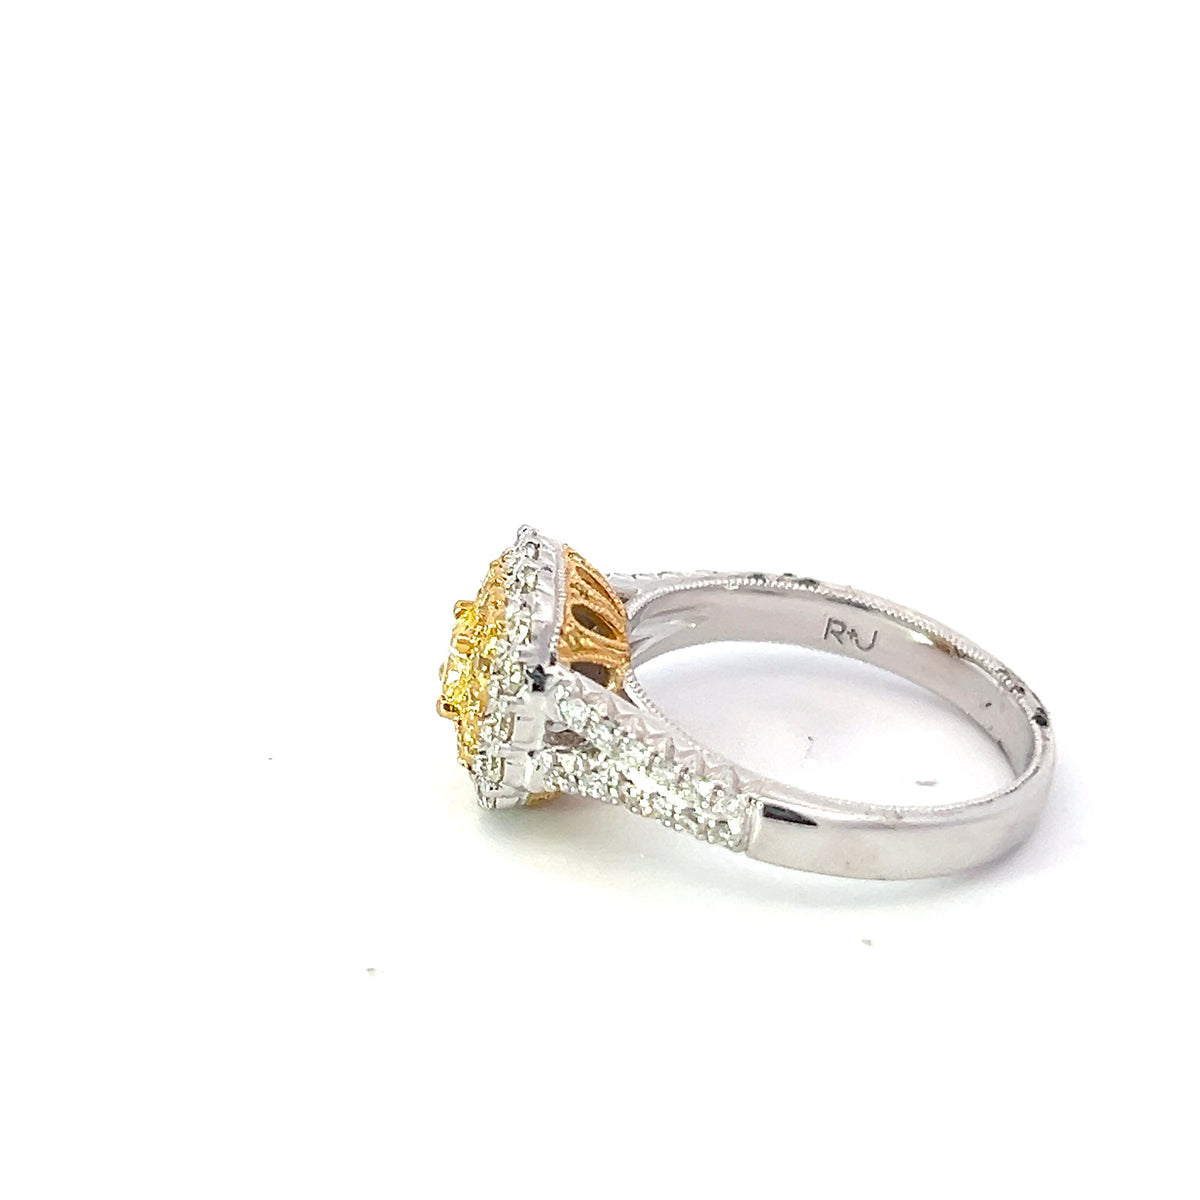 14K White Gold Fancy Yellow and White Diamond Ring - size 6.5